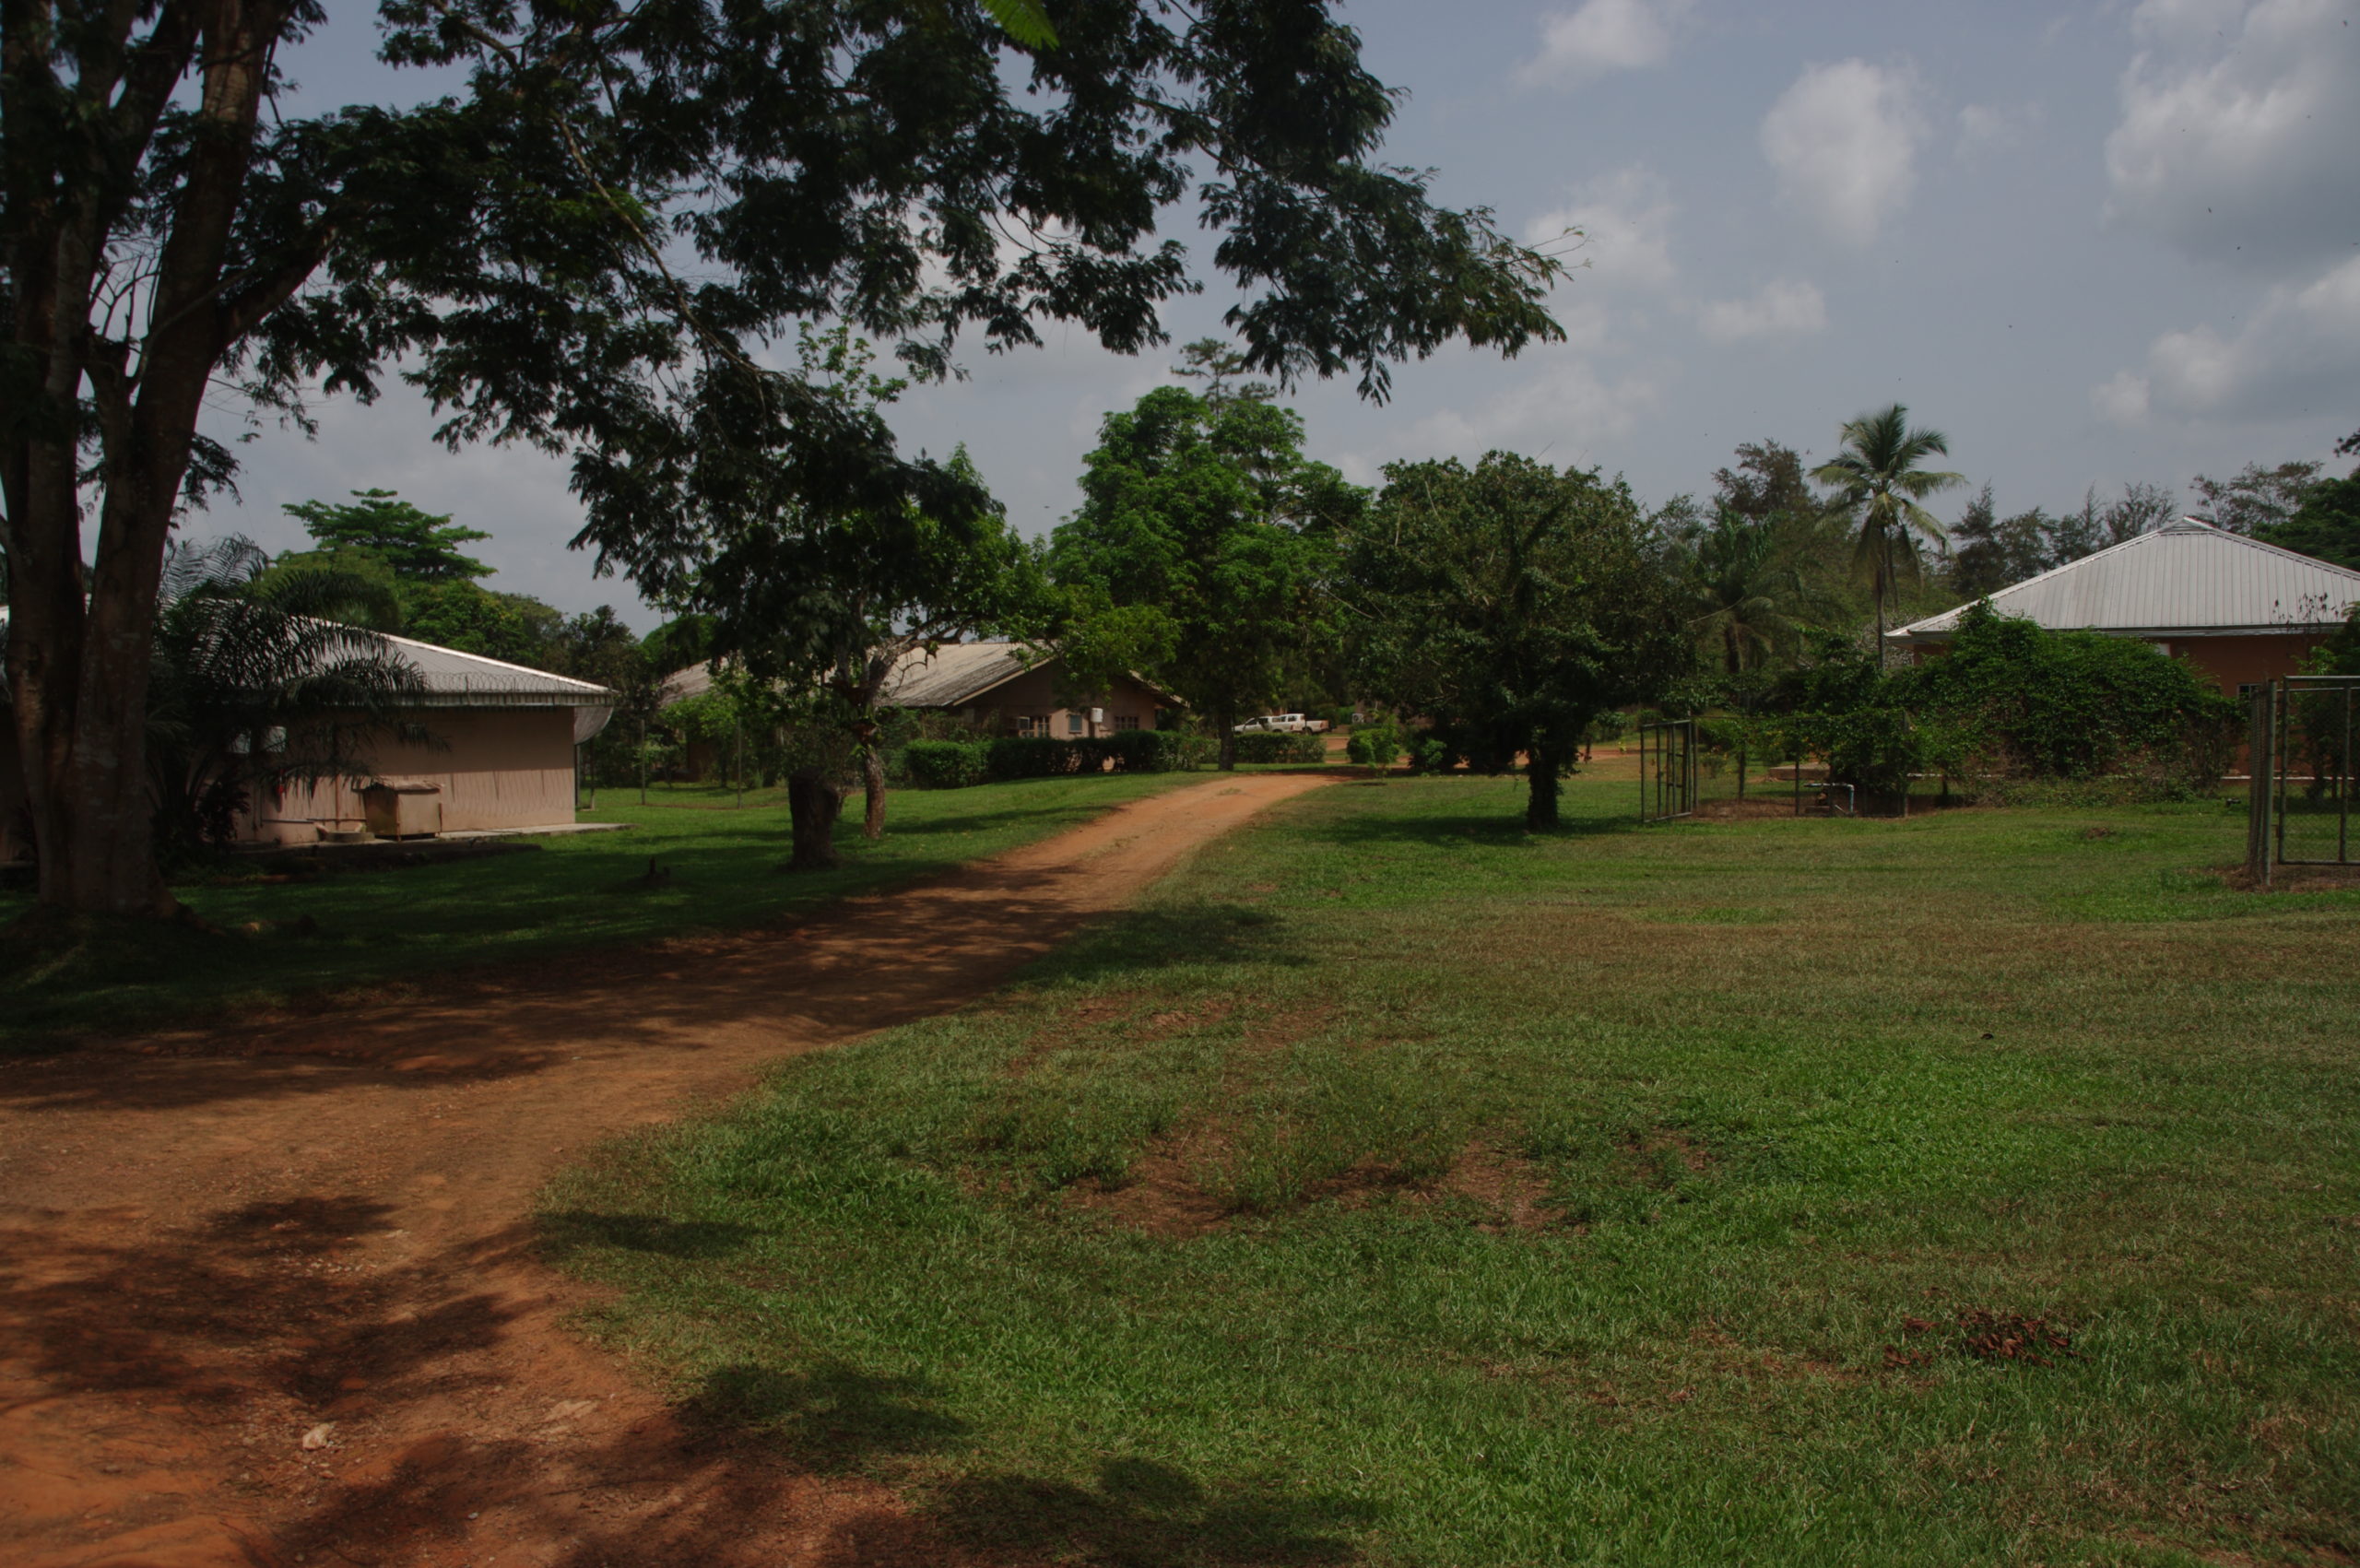 2016 Village, Okomu, Nigeria